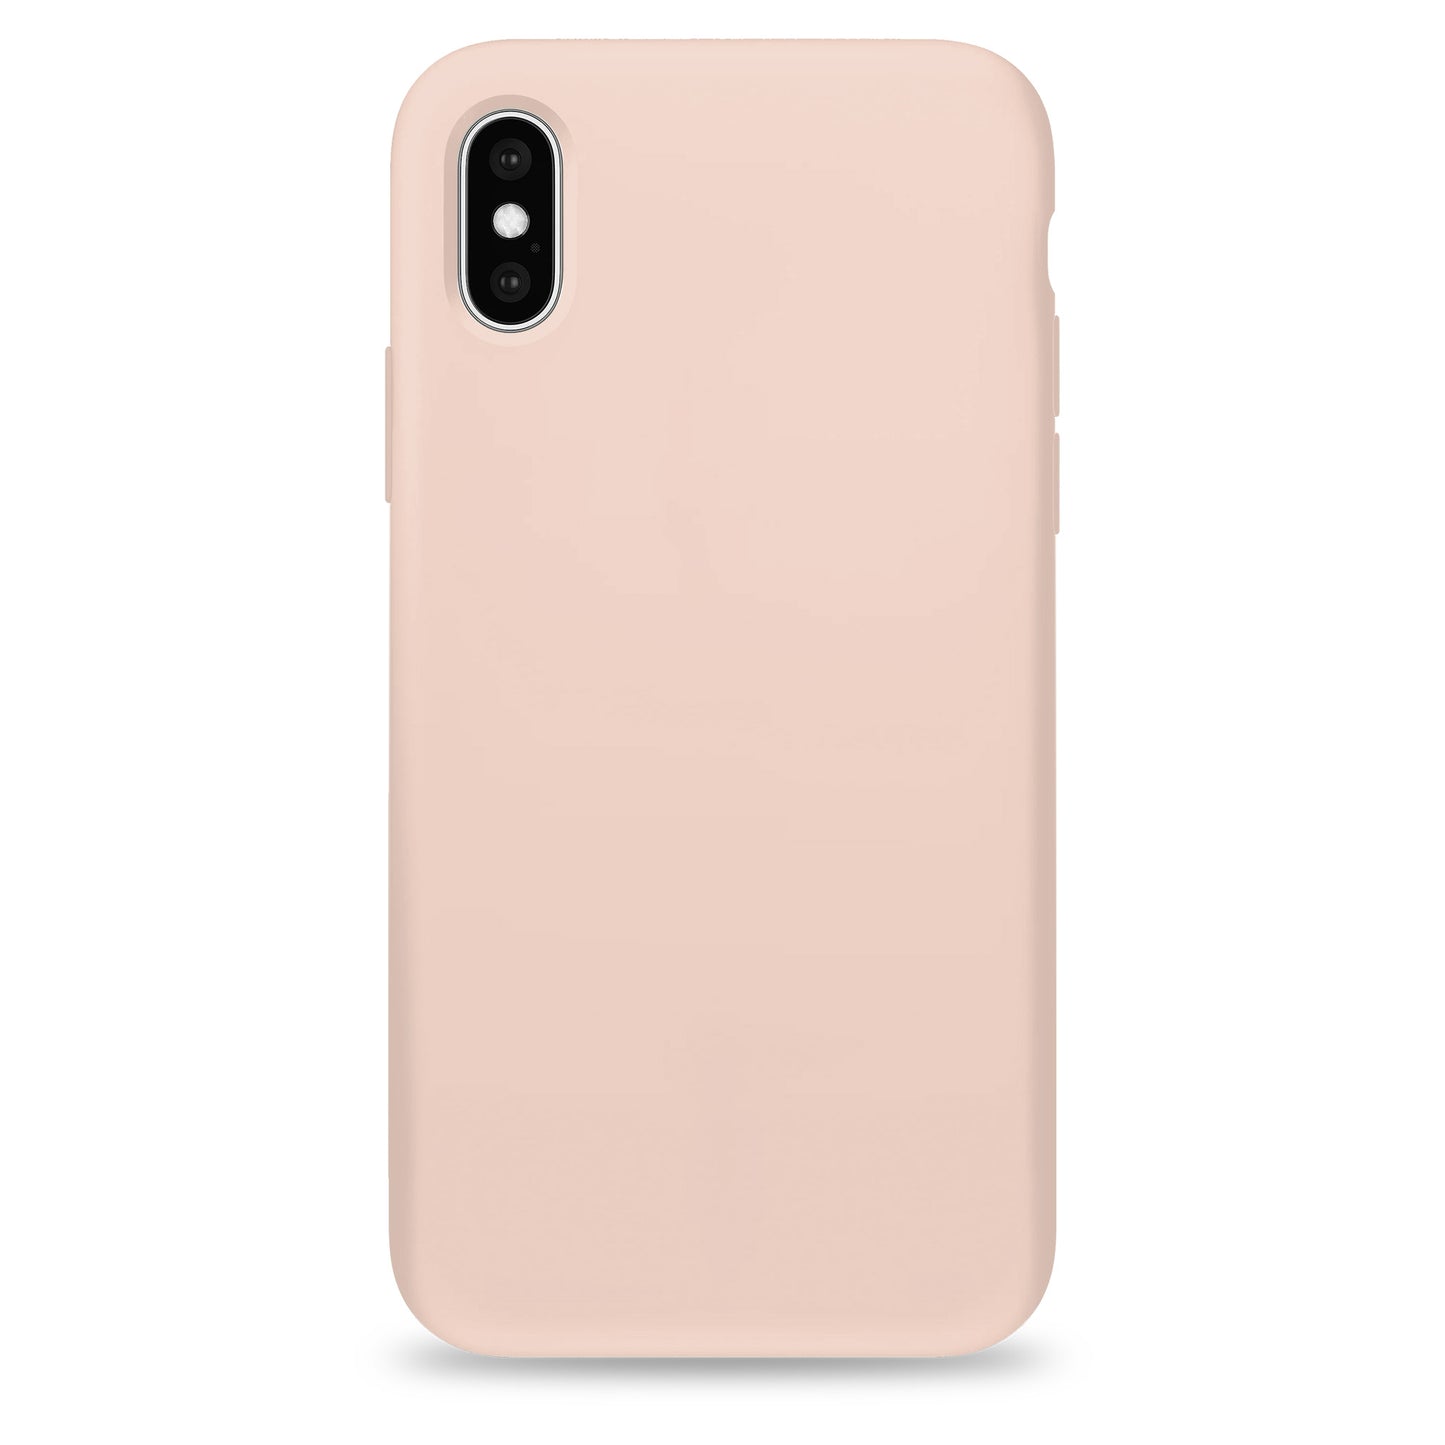 Sand Pink Silikon Hülle für iPhone